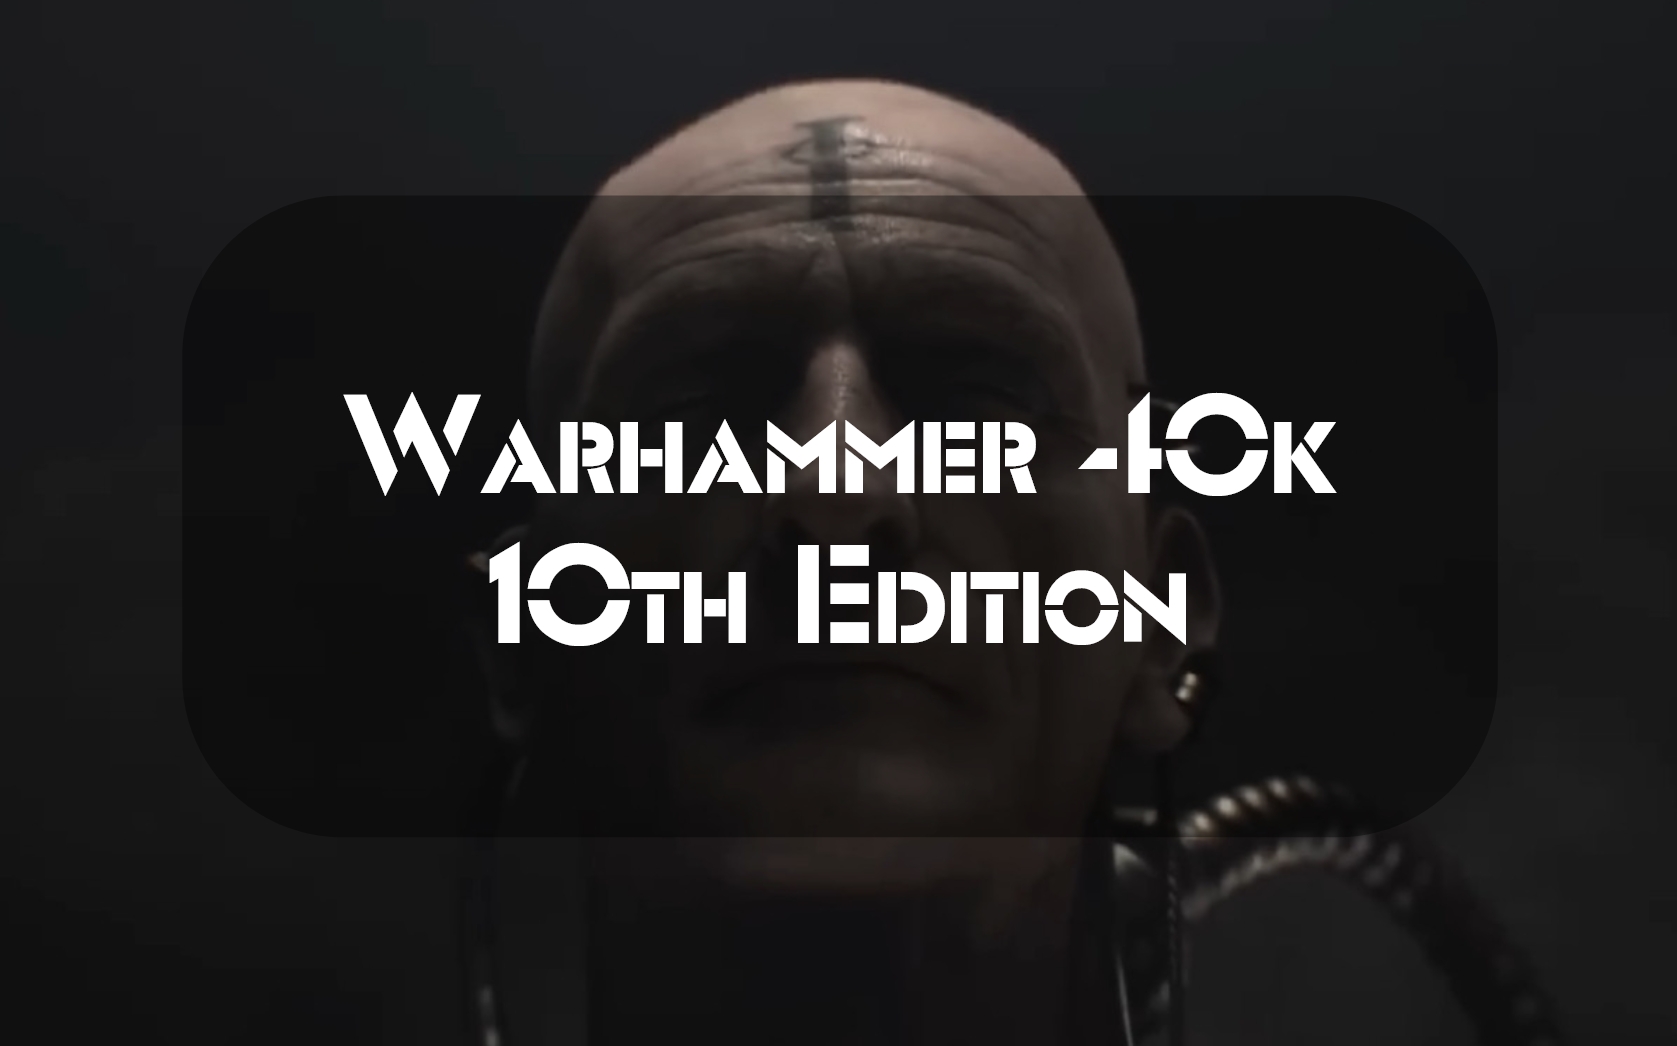 Warhammer 40k 10th Edition